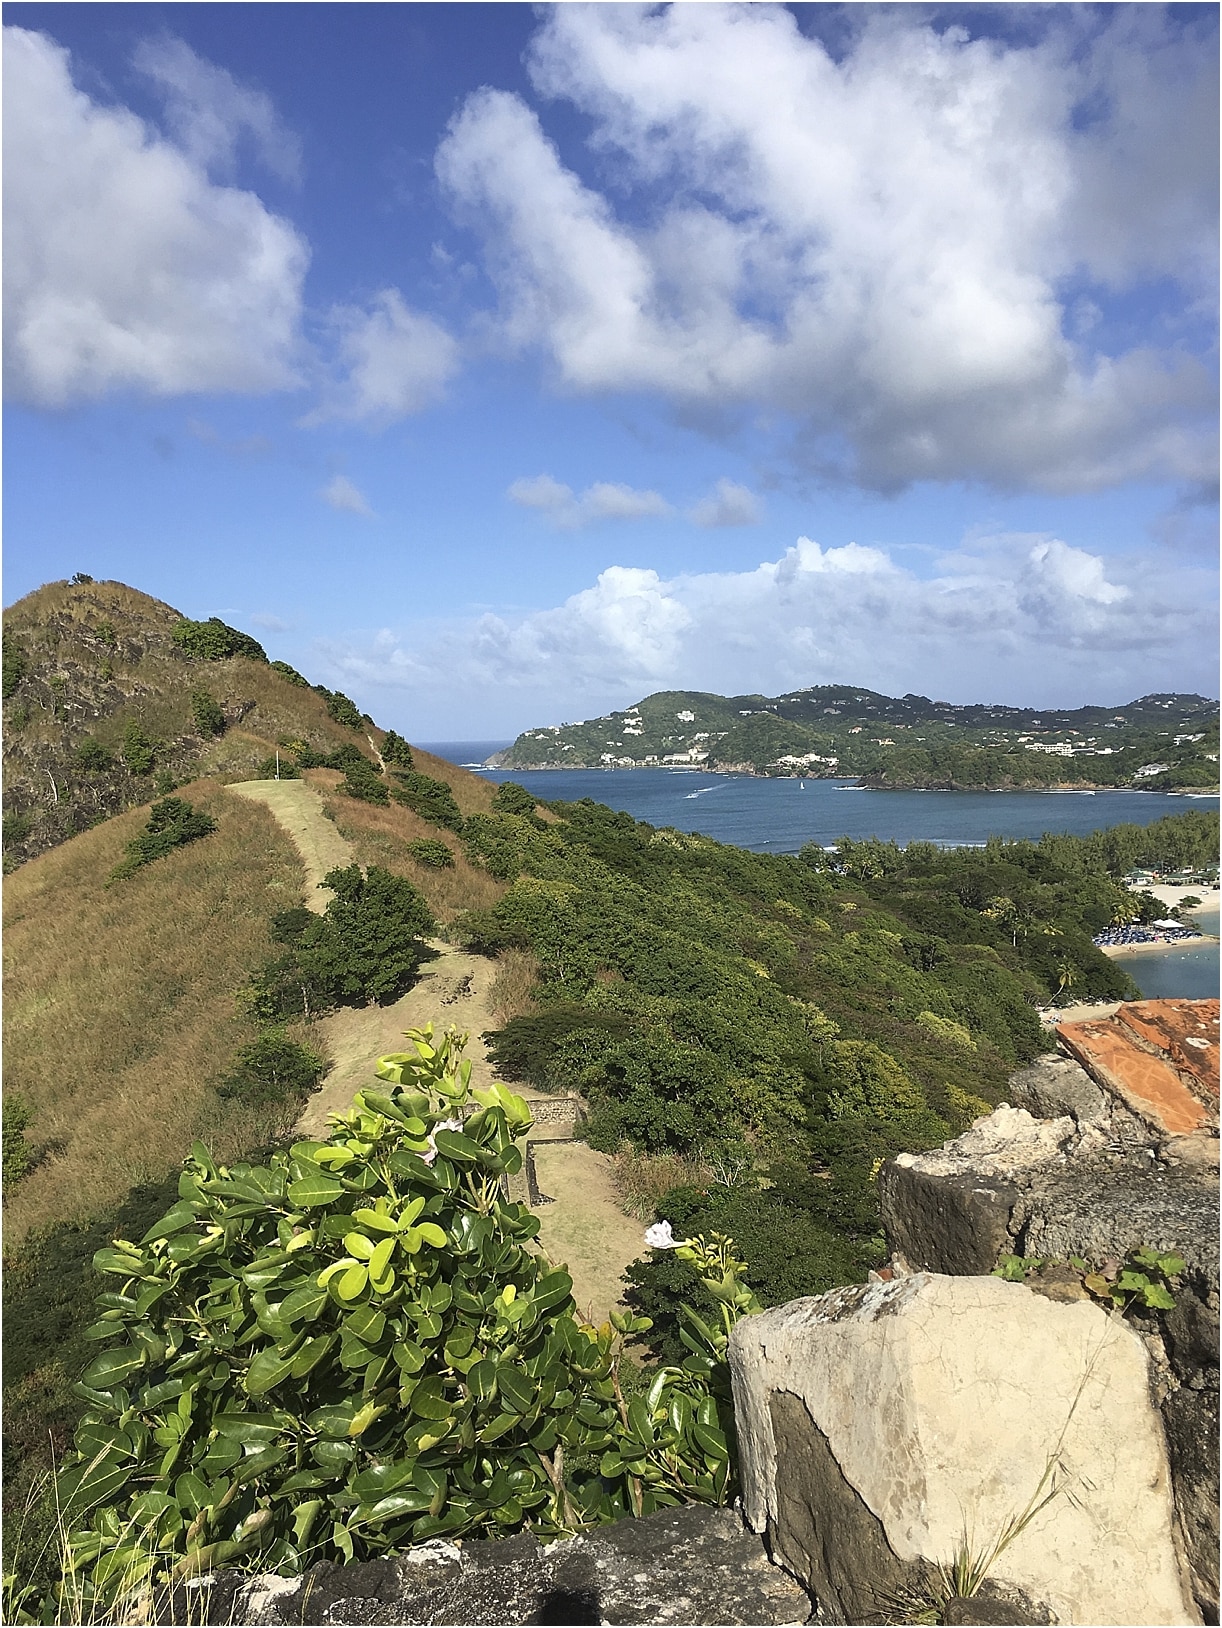 Traveling the English Caribbean Islands - Windstar Cruise - St. Lucia | Hill City Bride Wedding Travel Blog Virginia